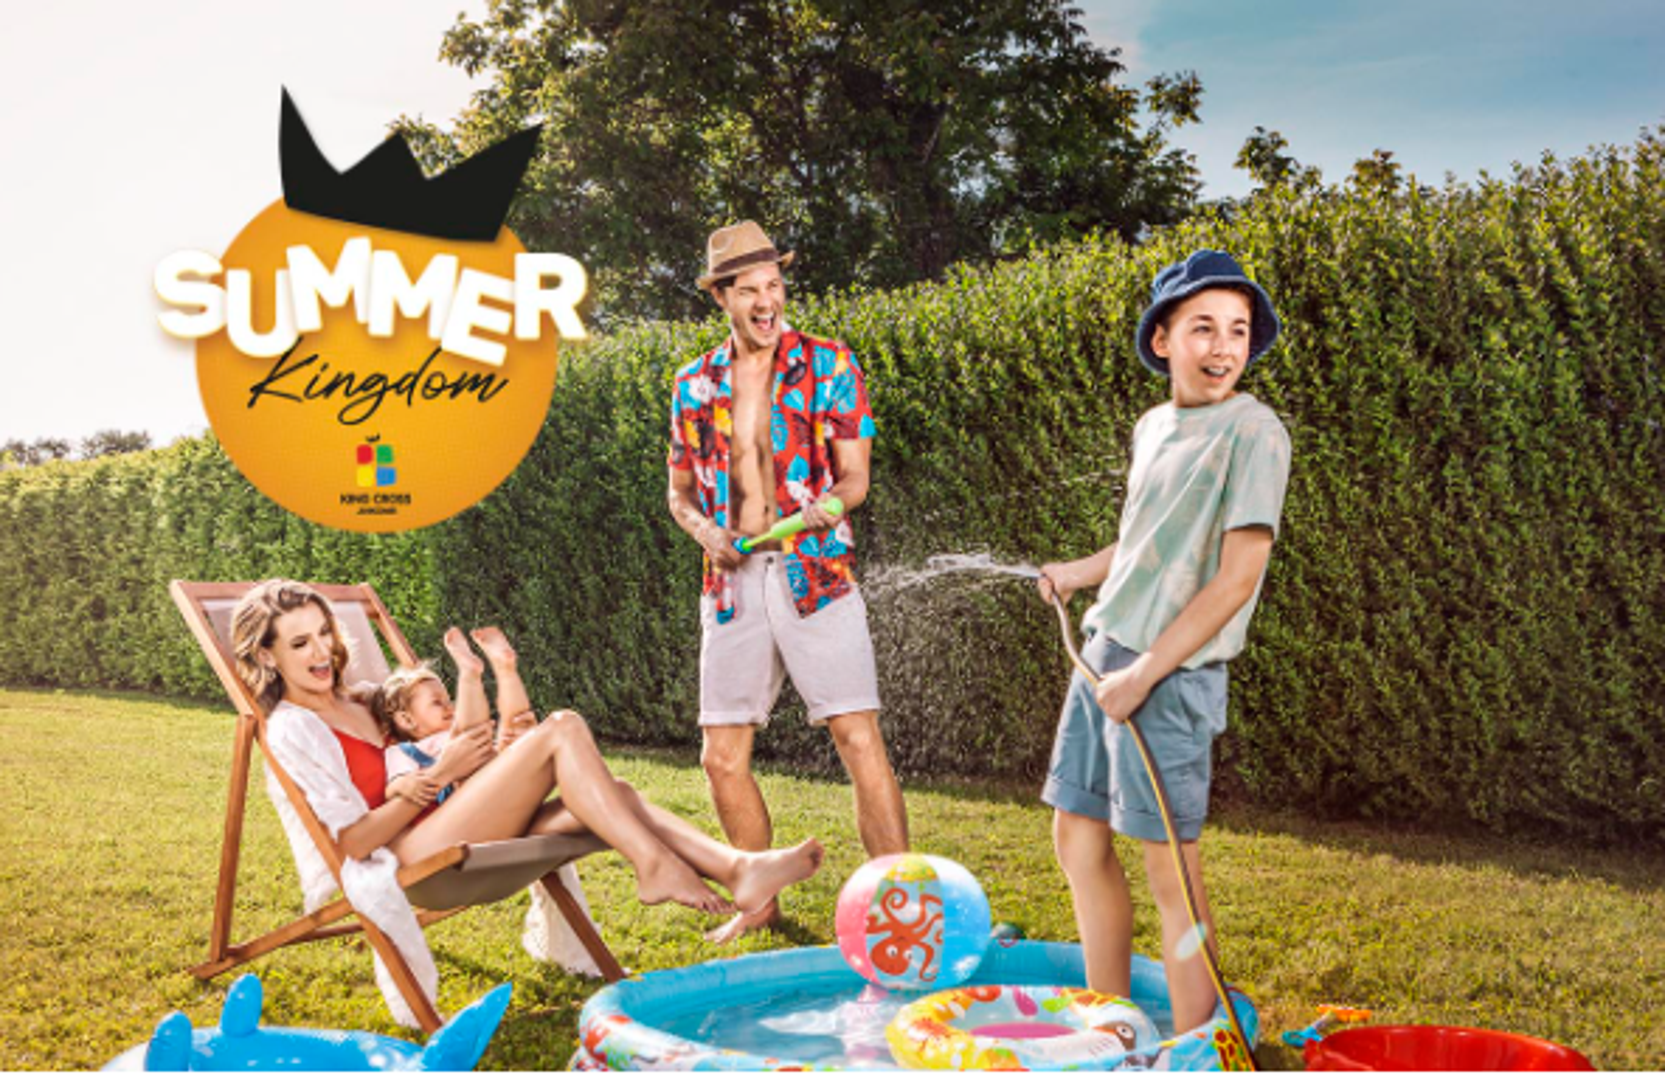 Summer Kingdom by King Cross – najbolja ljetna obiteljska zabava.